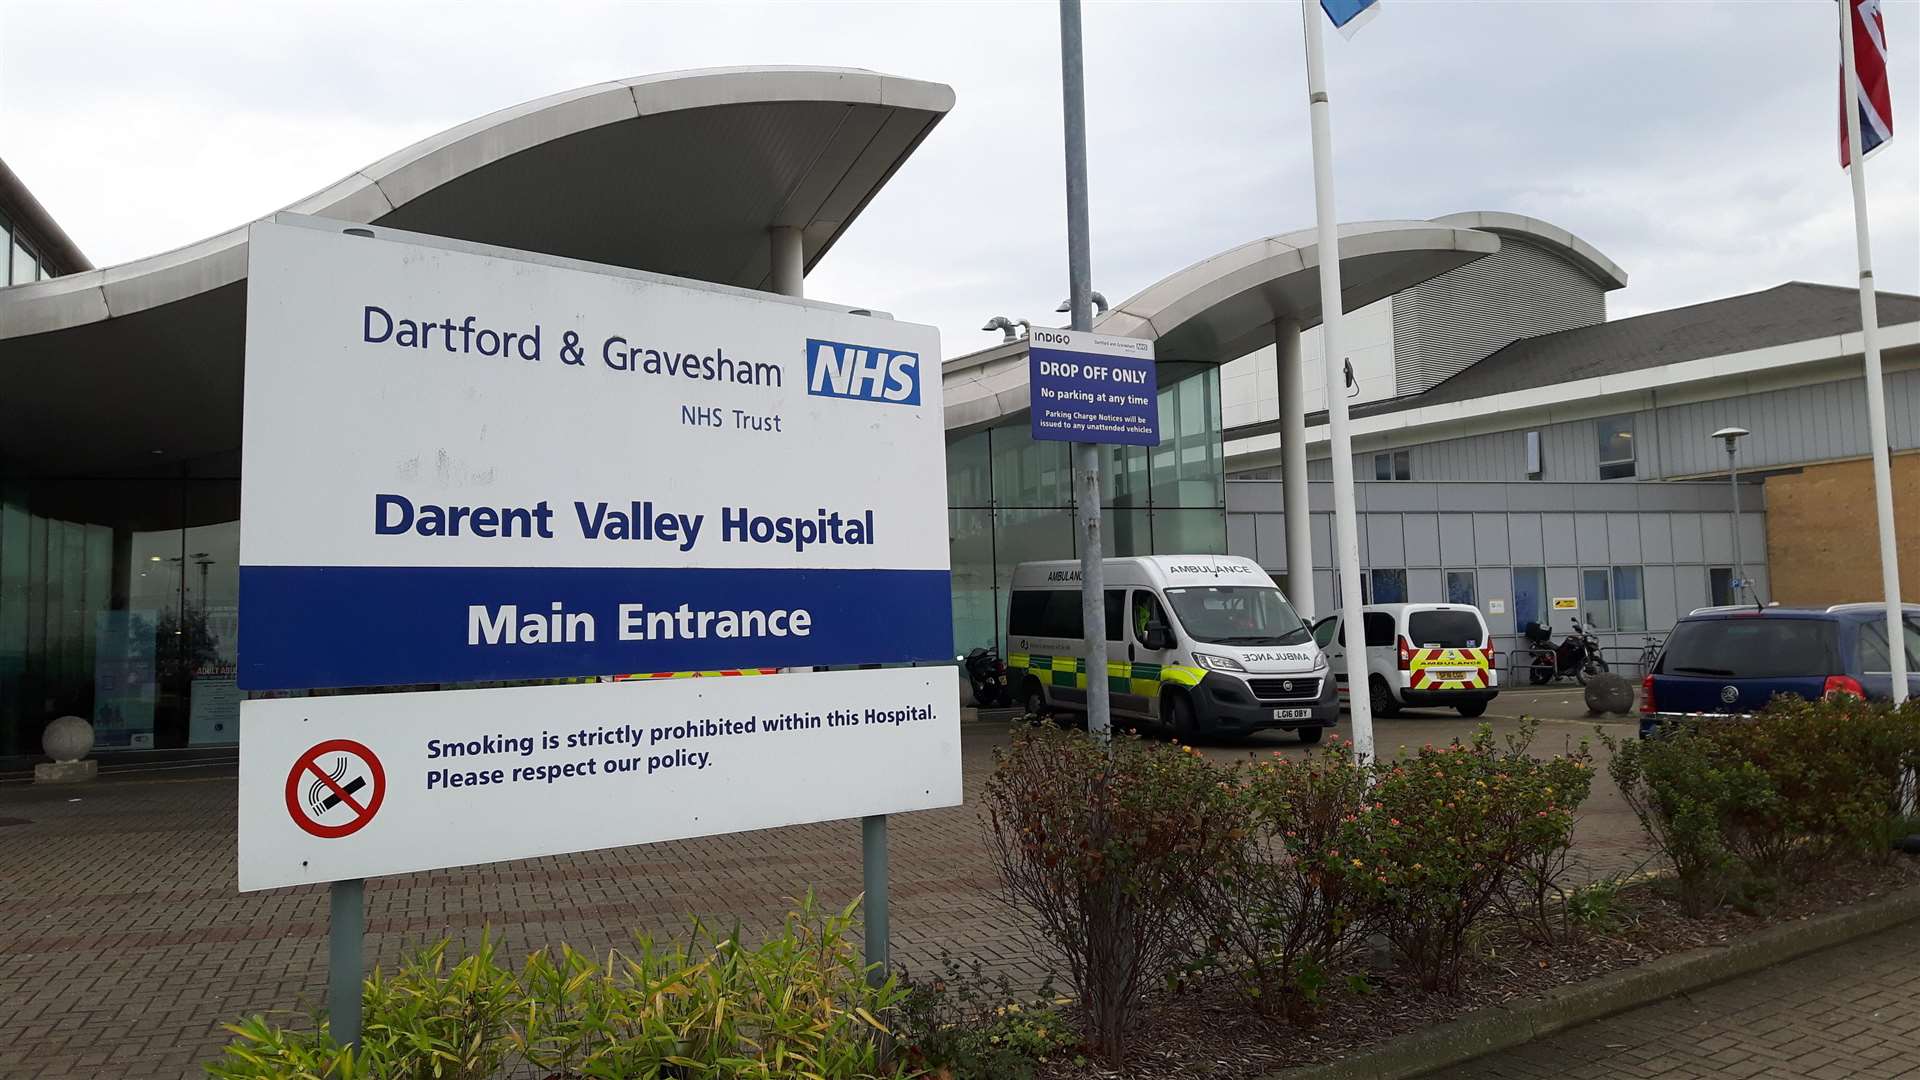 Darent Valley Hospital in Dartford